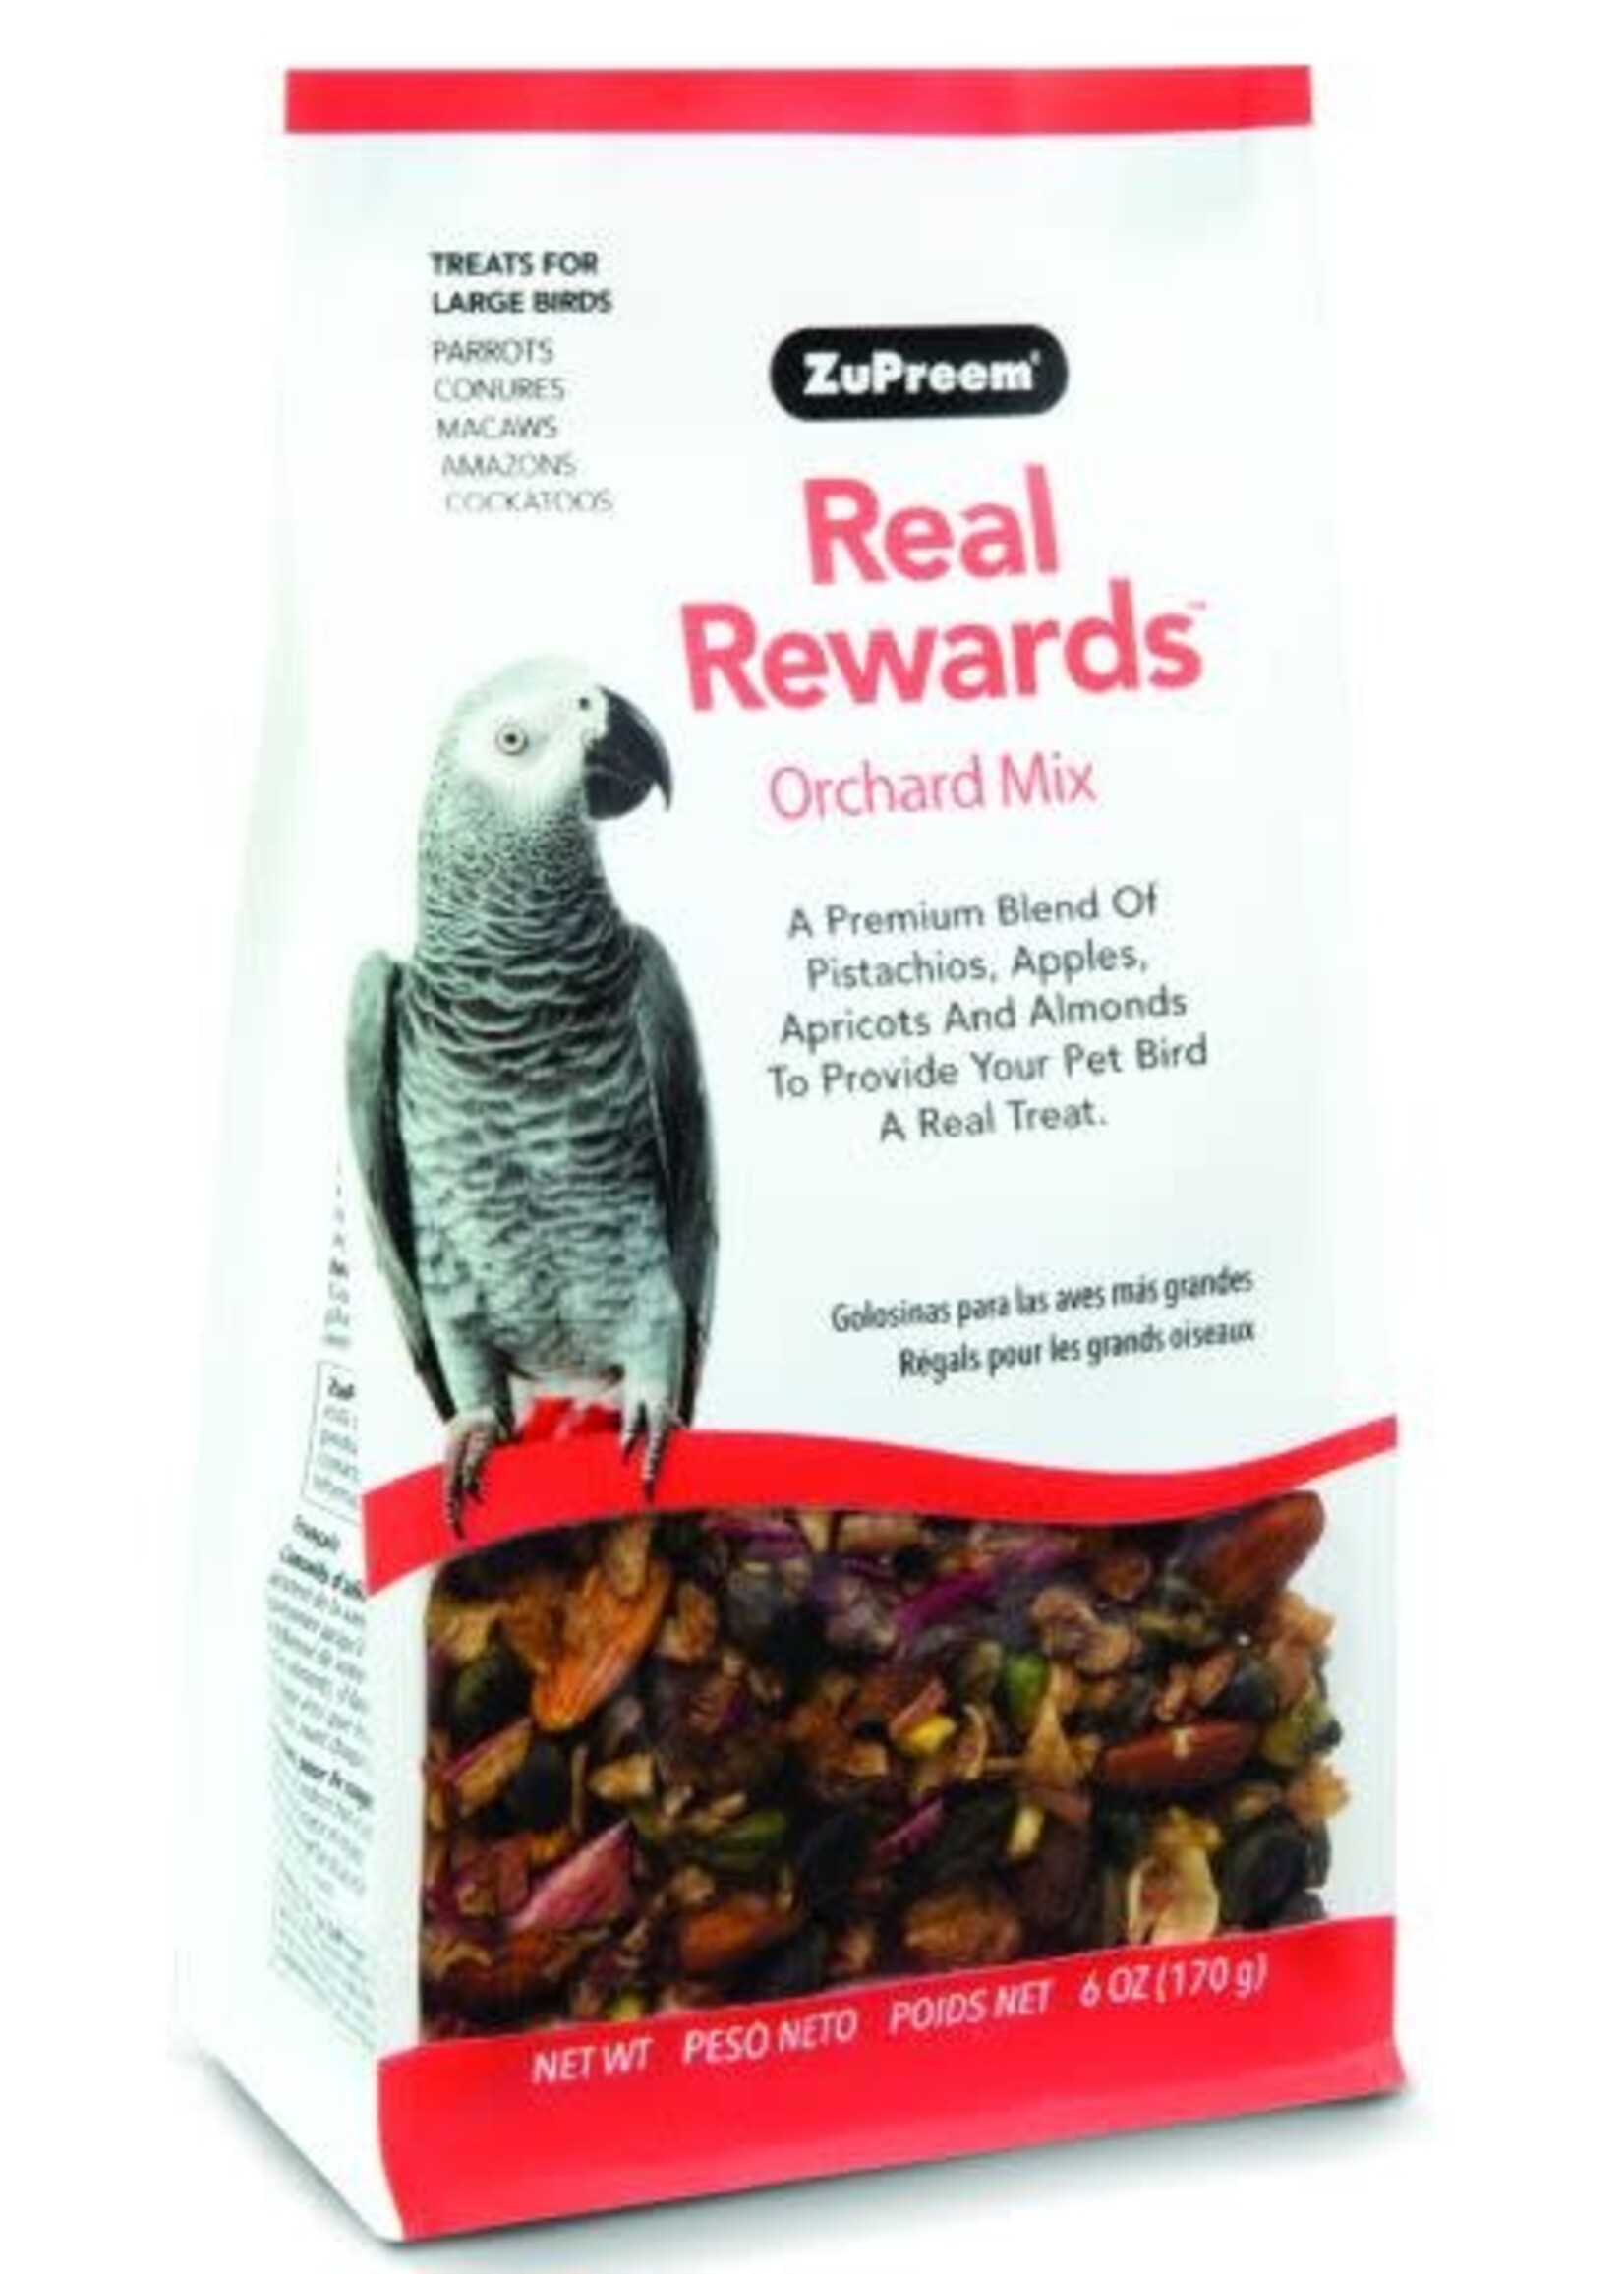 Zupreem ZuPreem "Real Rewards - Orchard Mix" Fruit & Nut Treats For Large Birds 6oz 49400